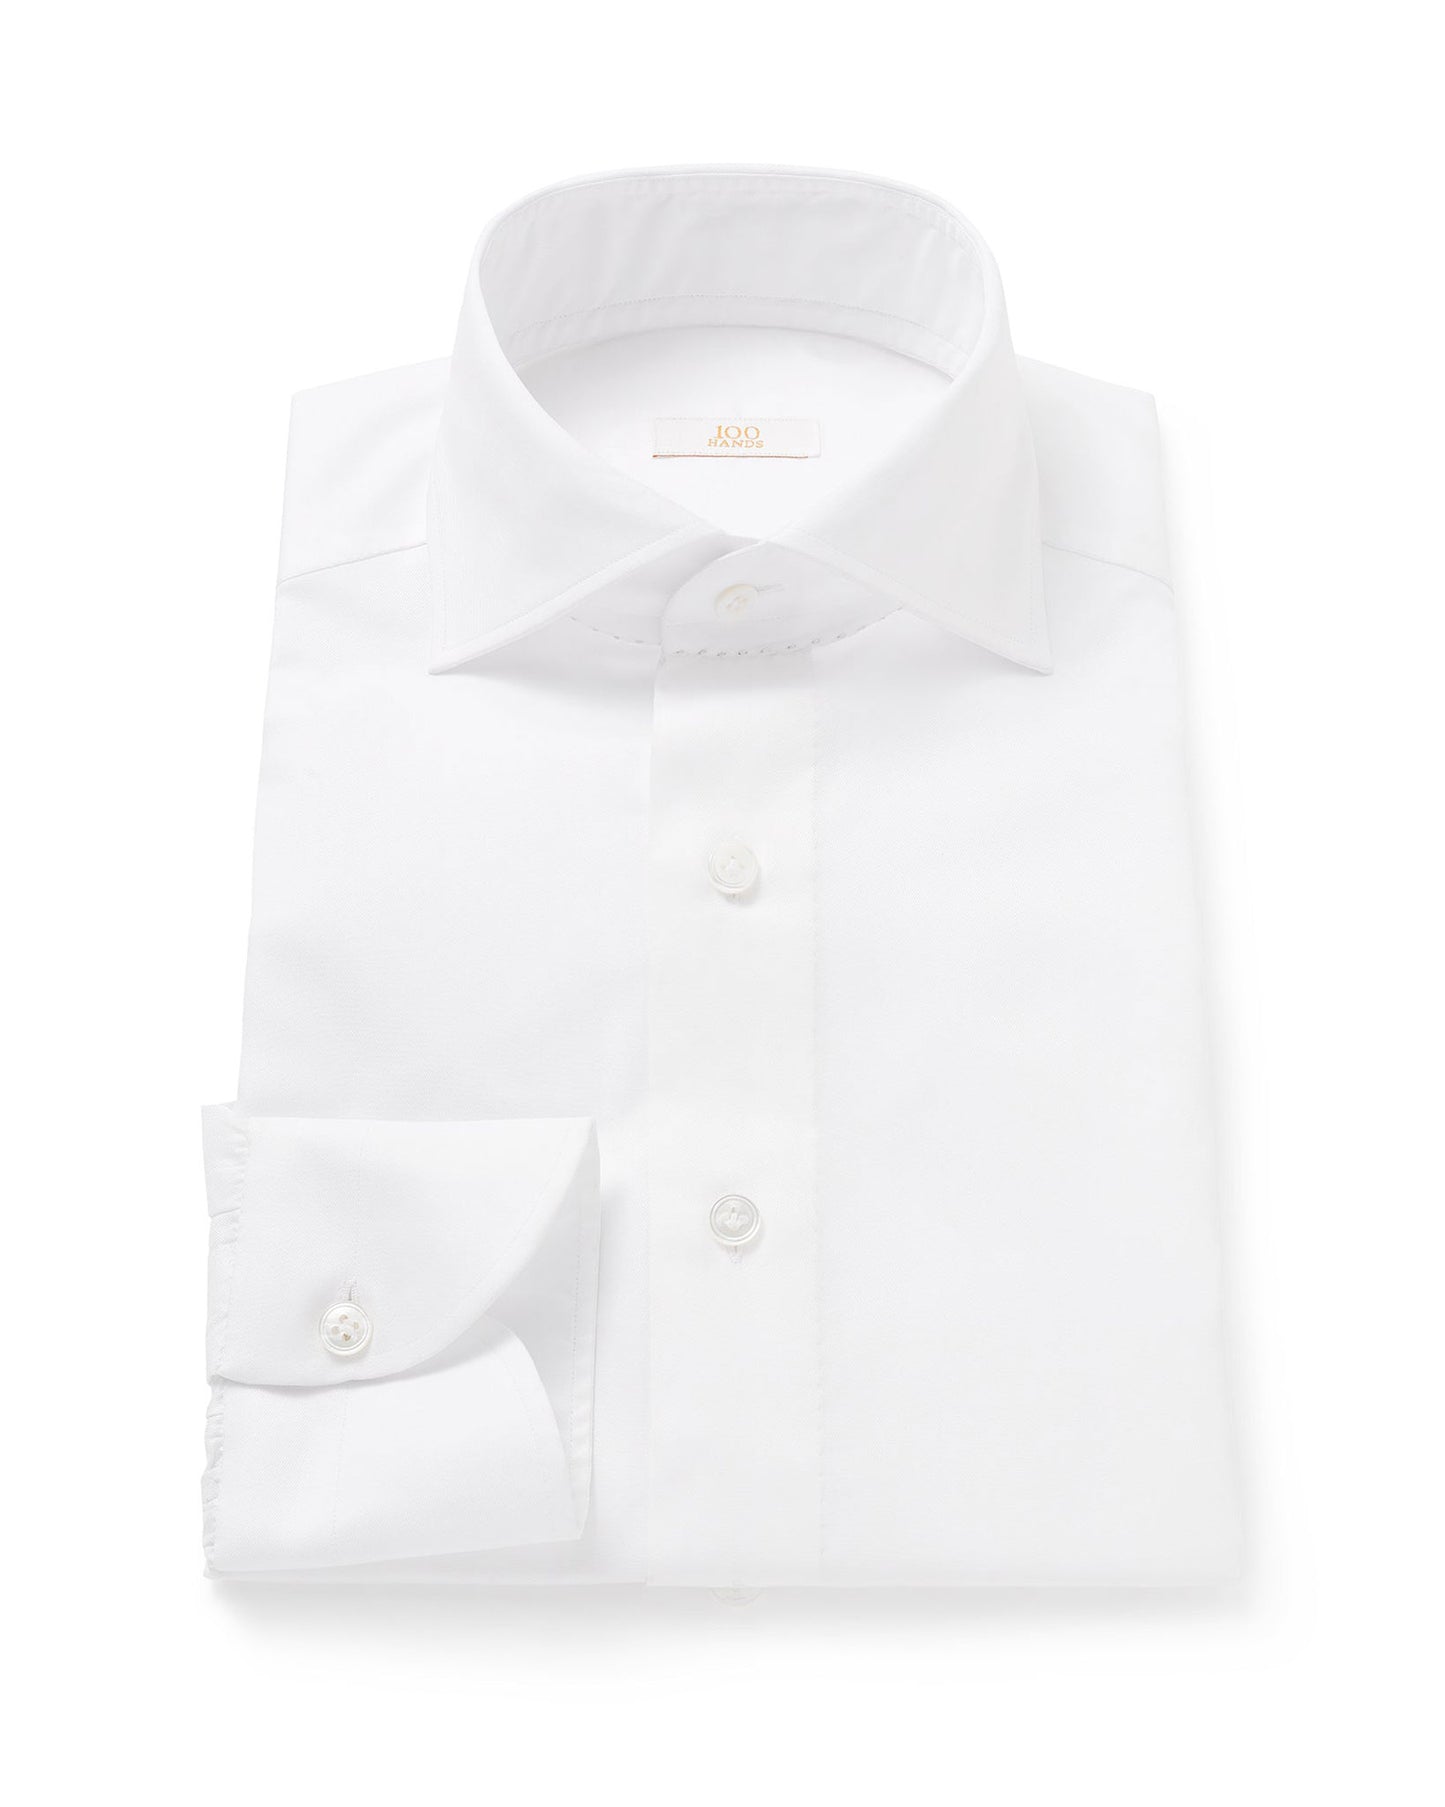 The best gold line white shirt, mens formal shirts Dubai.